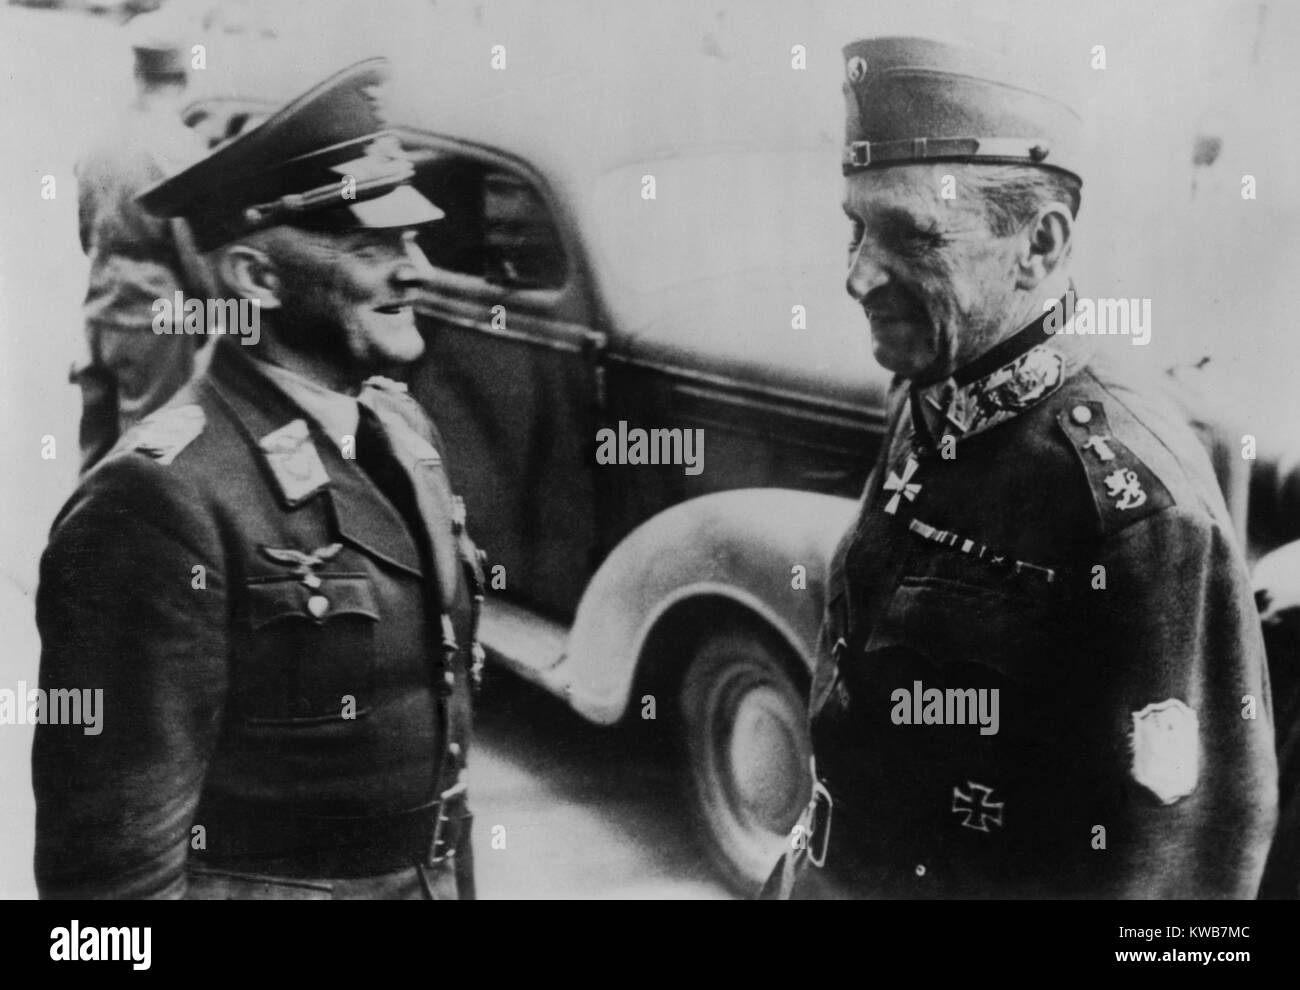 Finland's Marshal Mannerheim speaking with German air General Hans-Jurgen Stumpff, August 1941. Finland accepted German assistance during the 'Continuation War' (June 25, 1941- Sept. 19, 1944) against the Soviet Union(Russia). World War 2. (BSLOC 2014 8 151) Stock Photo